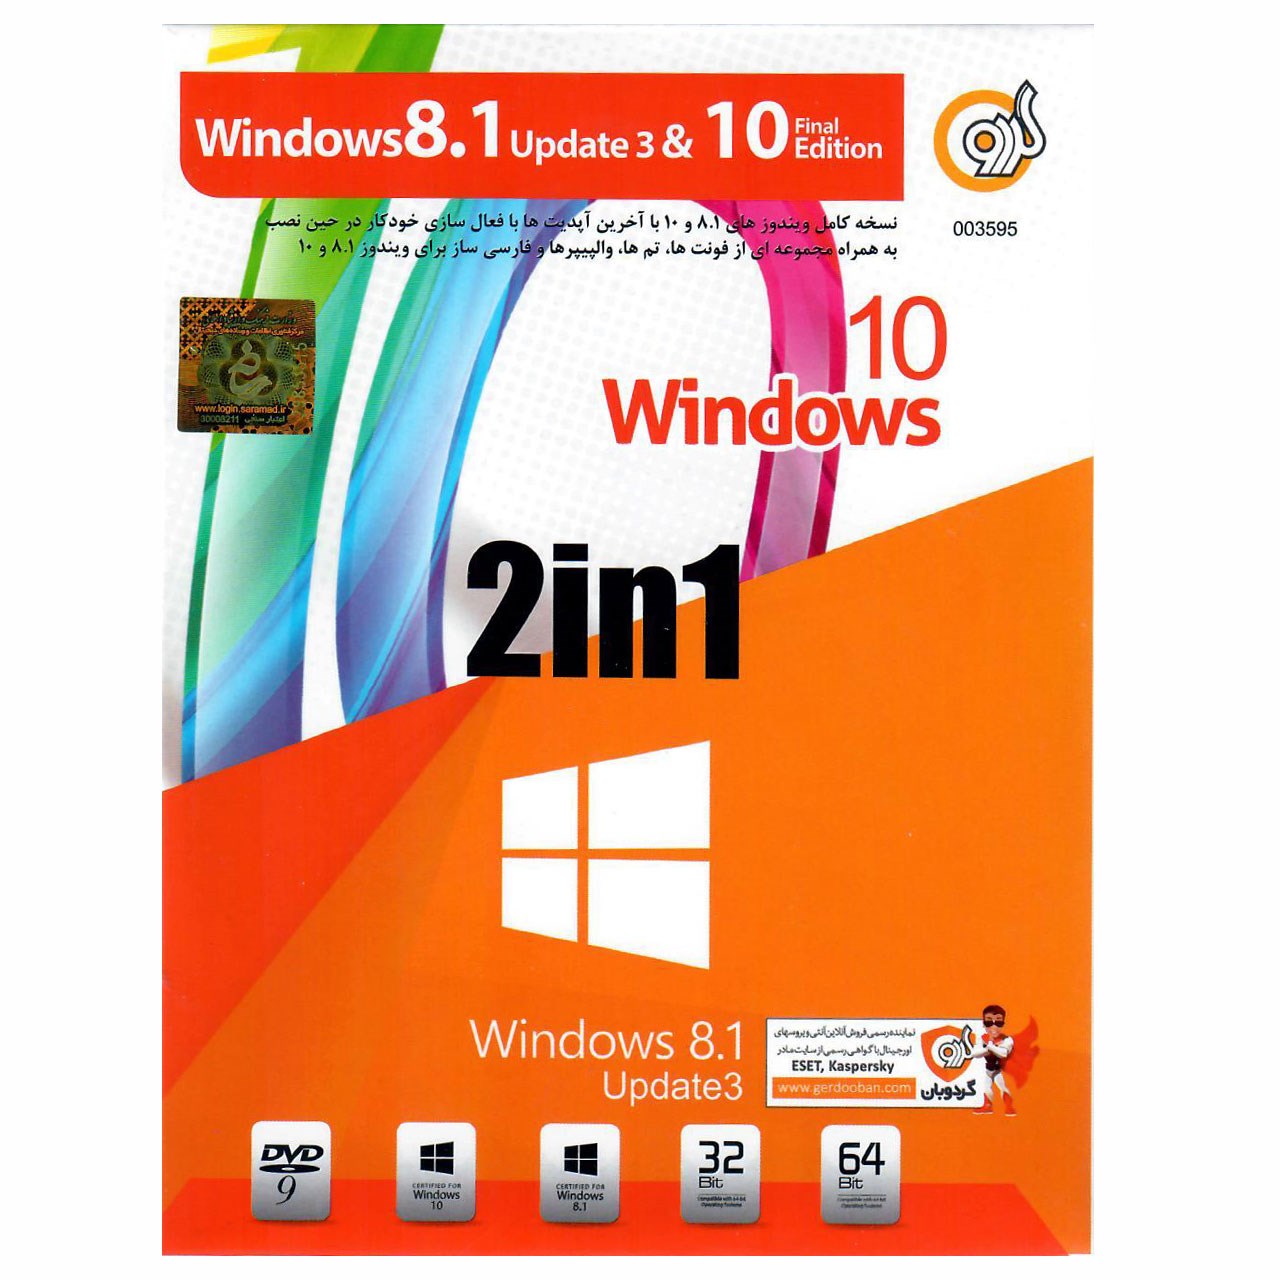 سیستم عامل Windows 10 Final Edition  - Windows 10 Update 3  نشر  گردو